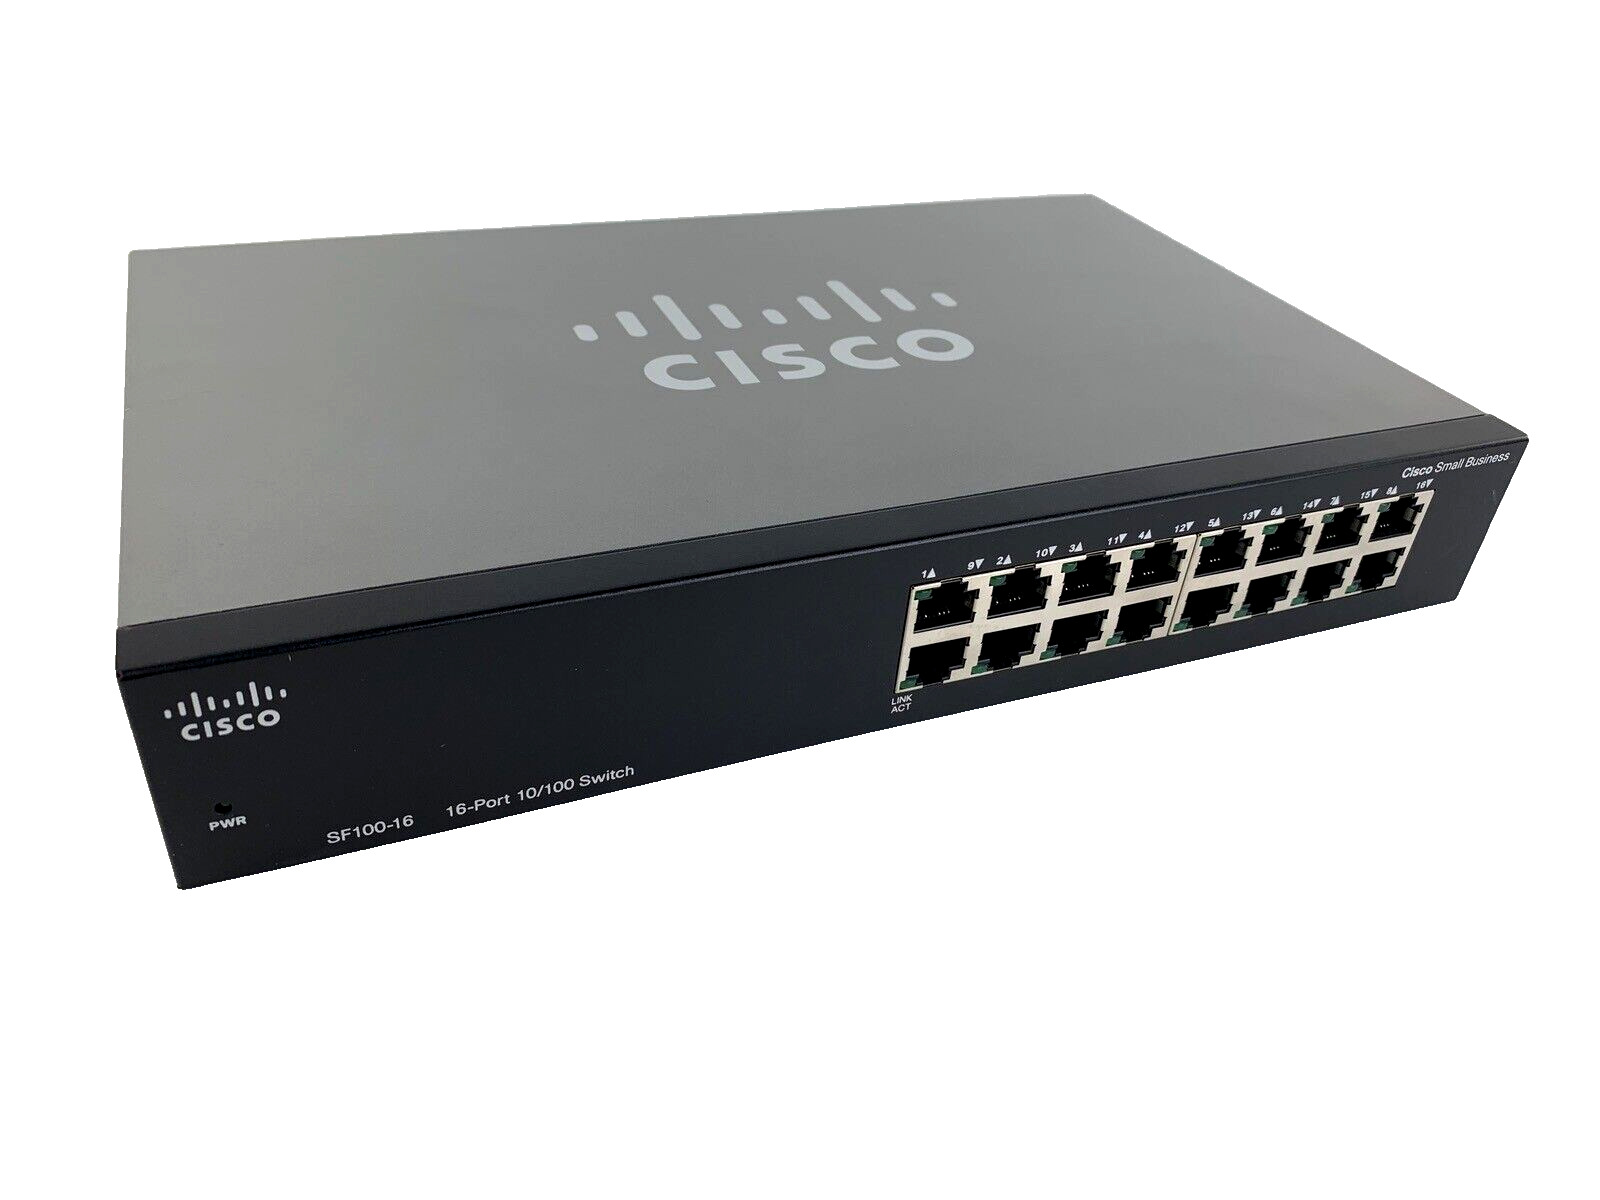 Cisco SF100-16 Industrial Ethernet Switch V2 16-Port 10/100 SF100-16 V02